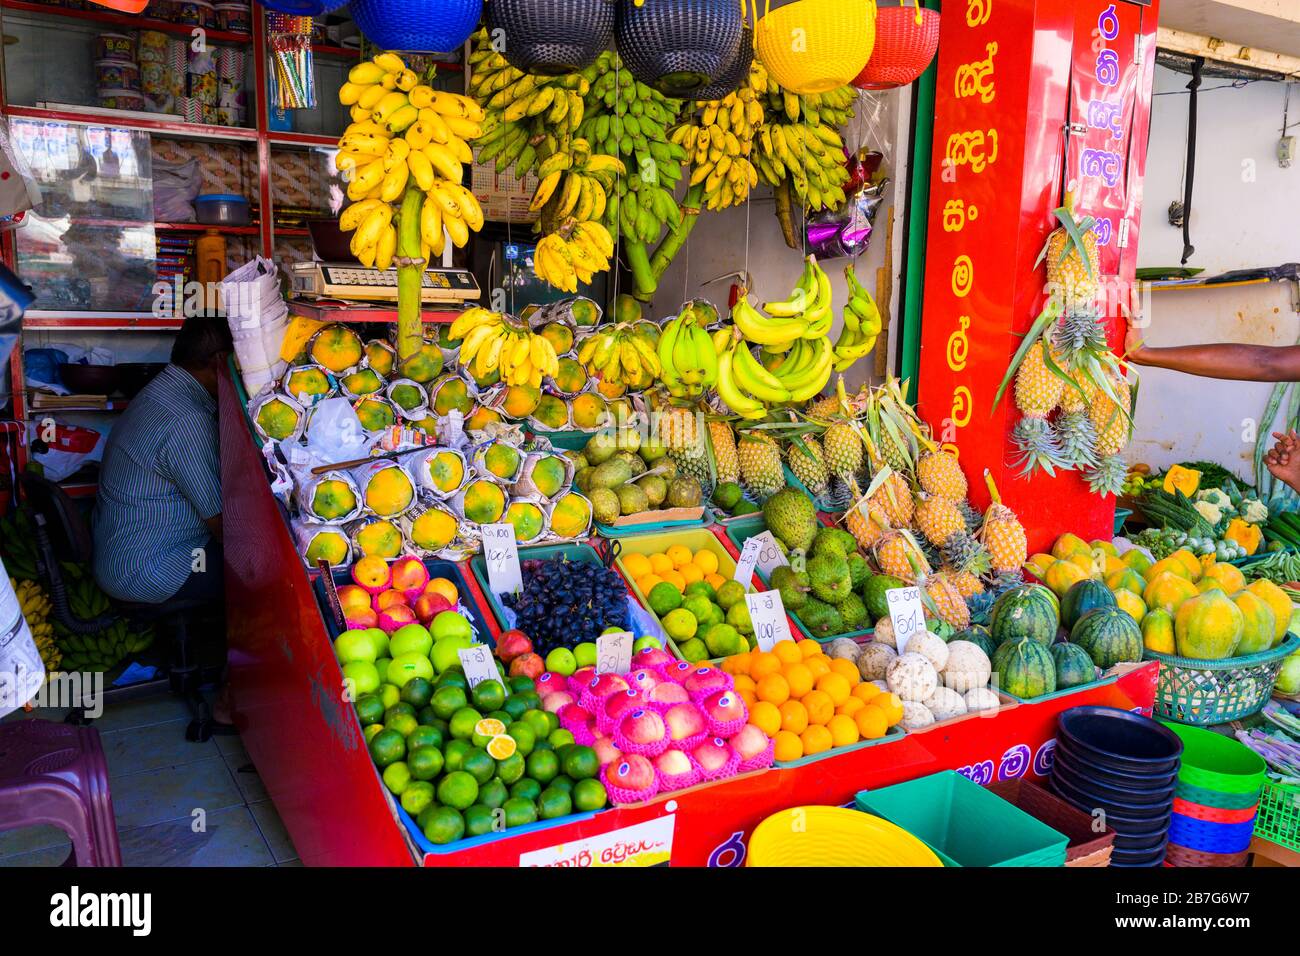 Asia meridional Sri Lanka Kandy Sinhala Provincia central antigua capital centro ciudad calle mercado escena greengrocer fruitier piña plátanos Foto de stock